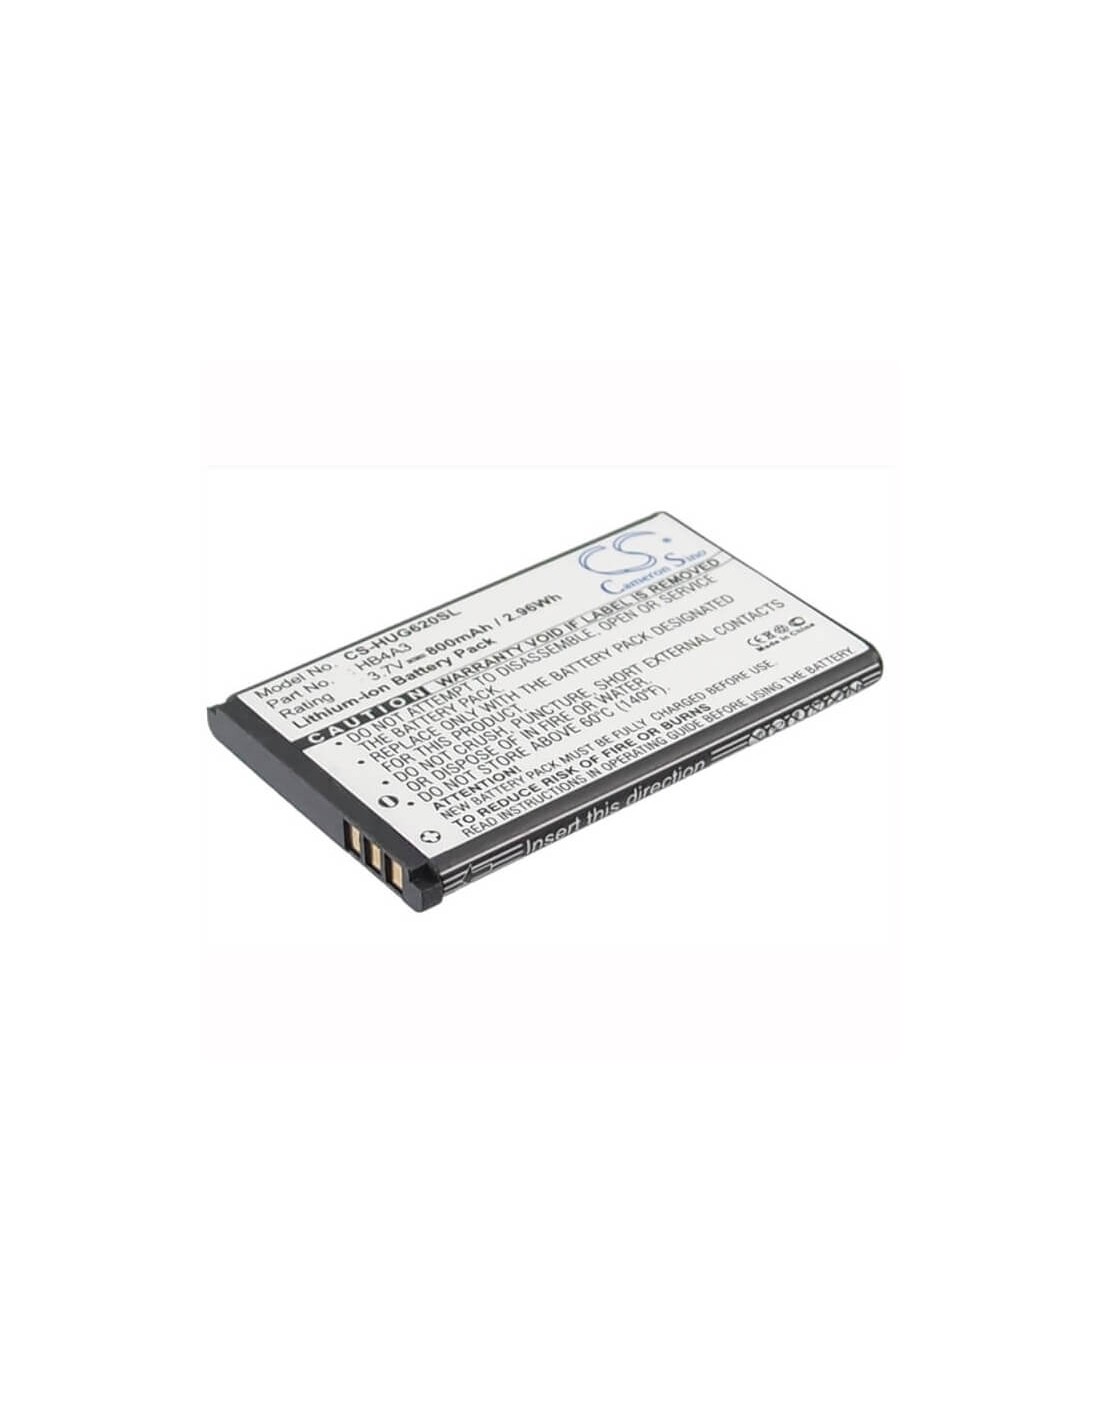 Battery for Huawei G6620, T1201, T1209 3.7V, 800mAh - 2.96Wh